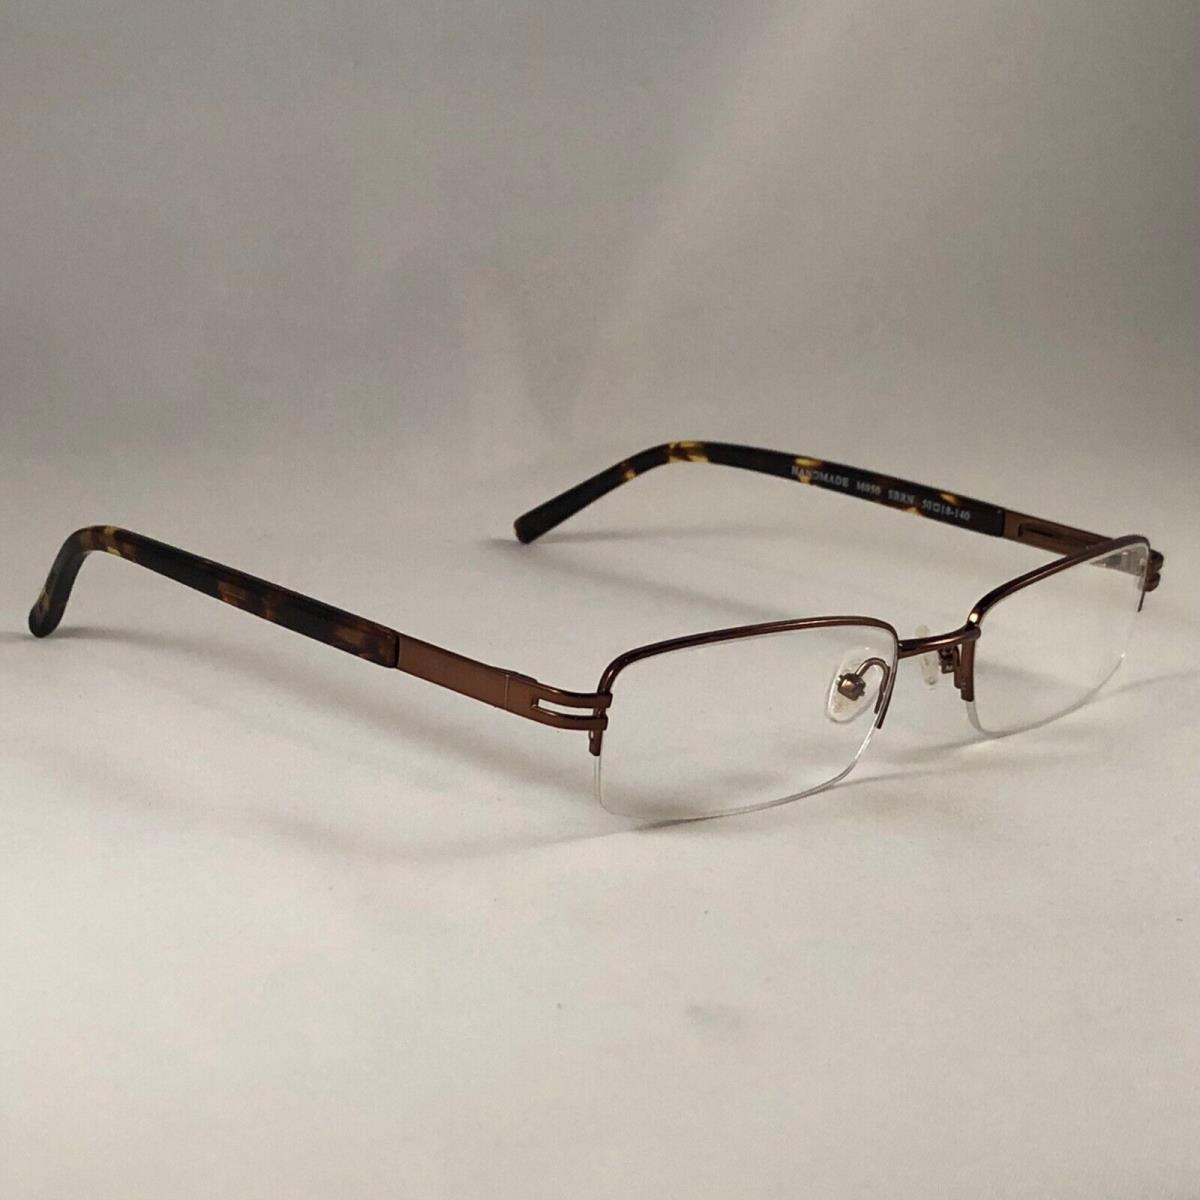 Steve Madden M050 Sbrn Handmade Half Eyeglass Frame Flex Copper Brown 50-18-140